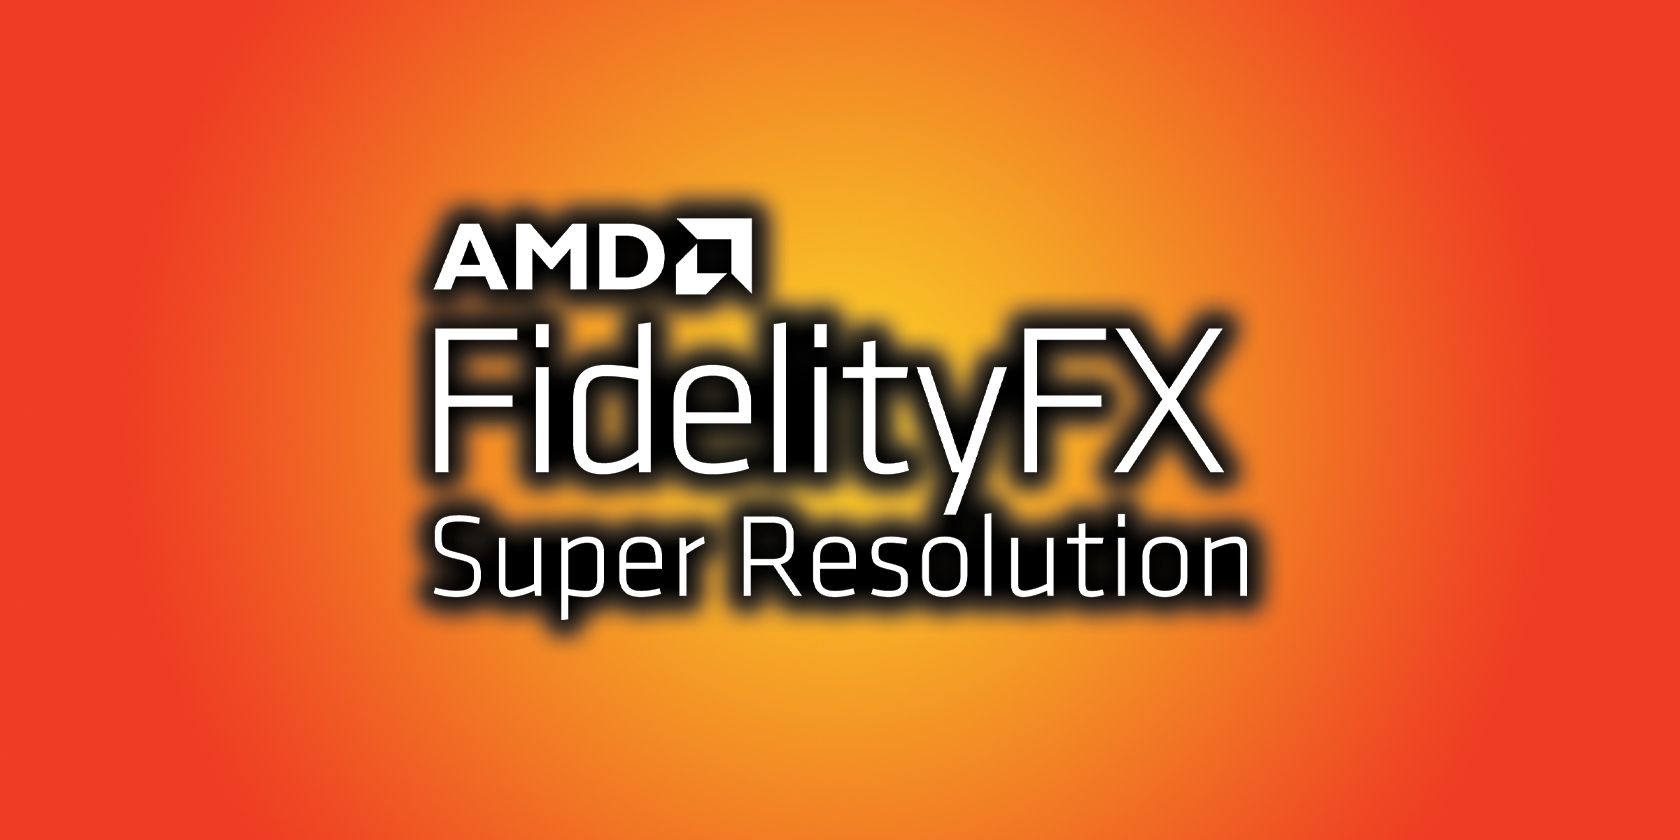 amd fidelityfx super resolution logo